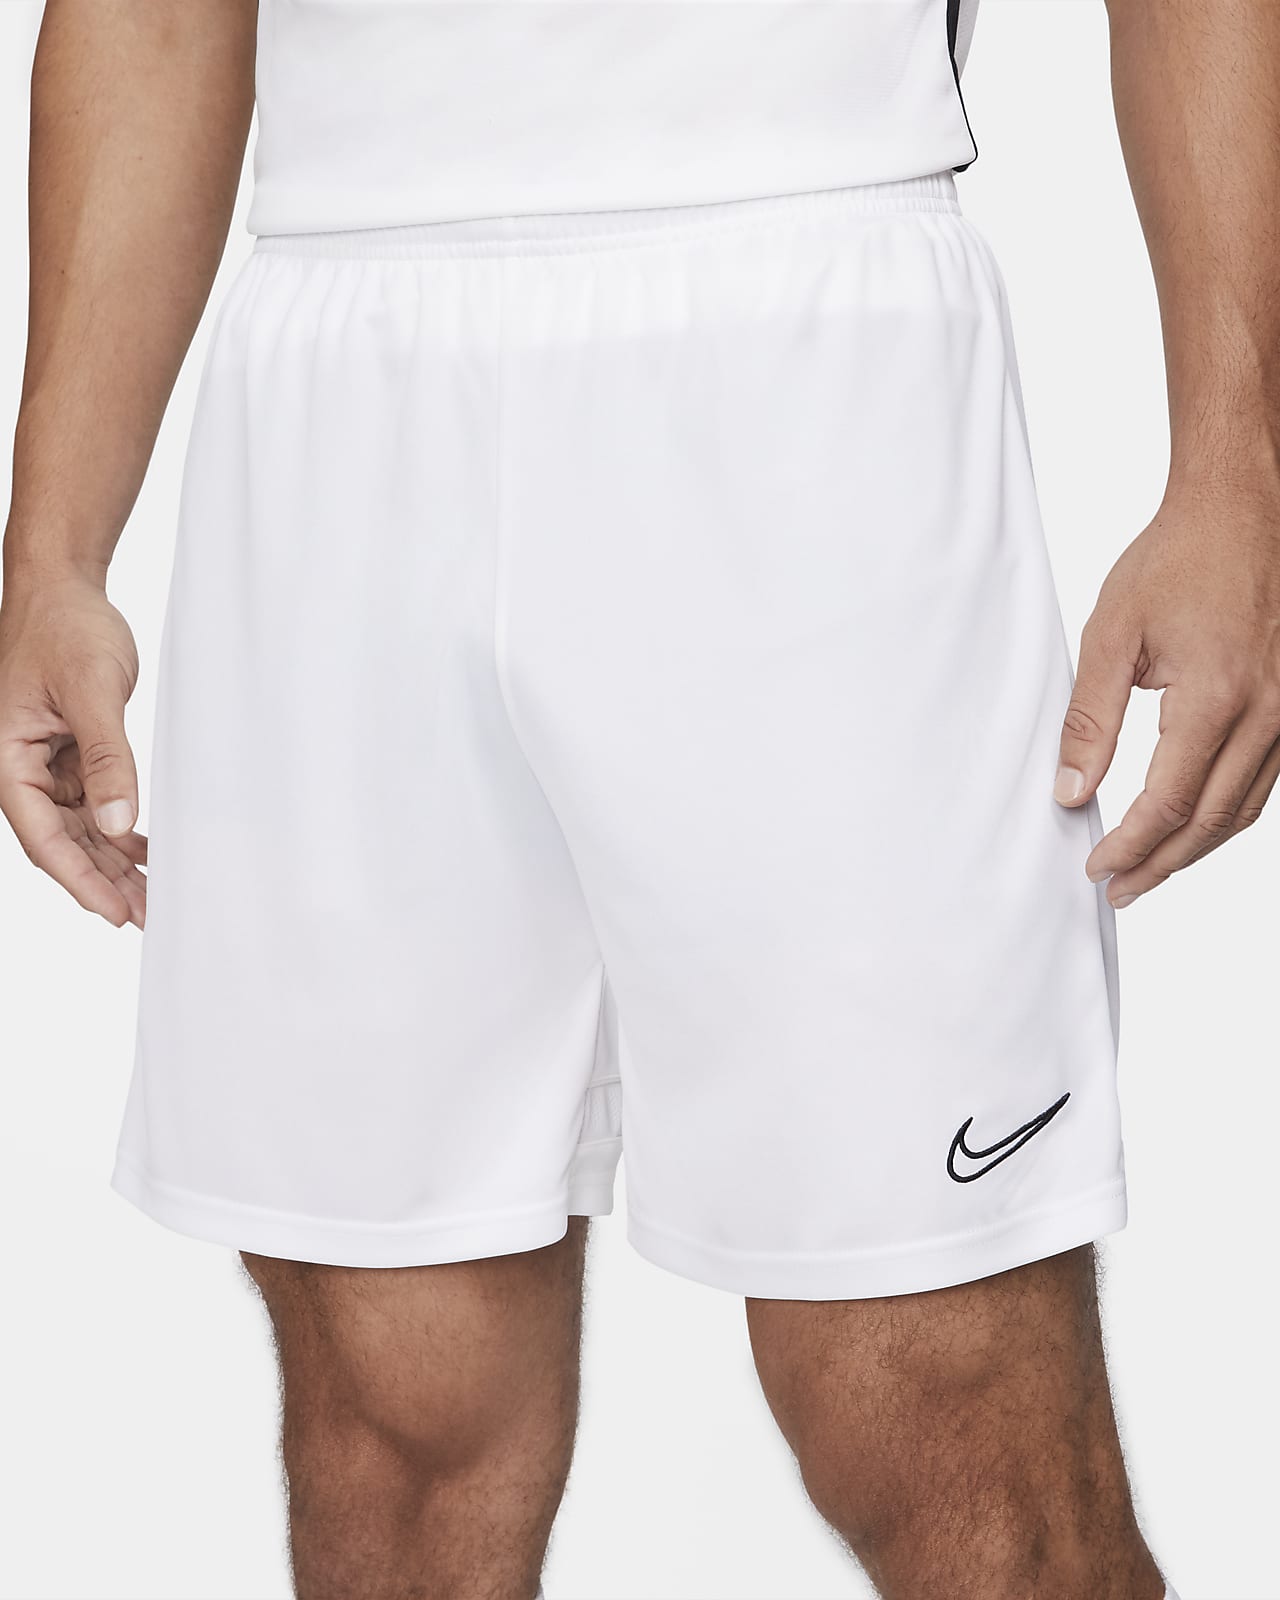 Doctrina Ubicación Significado PANTALON CORTO Nike Dri-fit Academy Mens Knit Soccer Shorts BLANCO